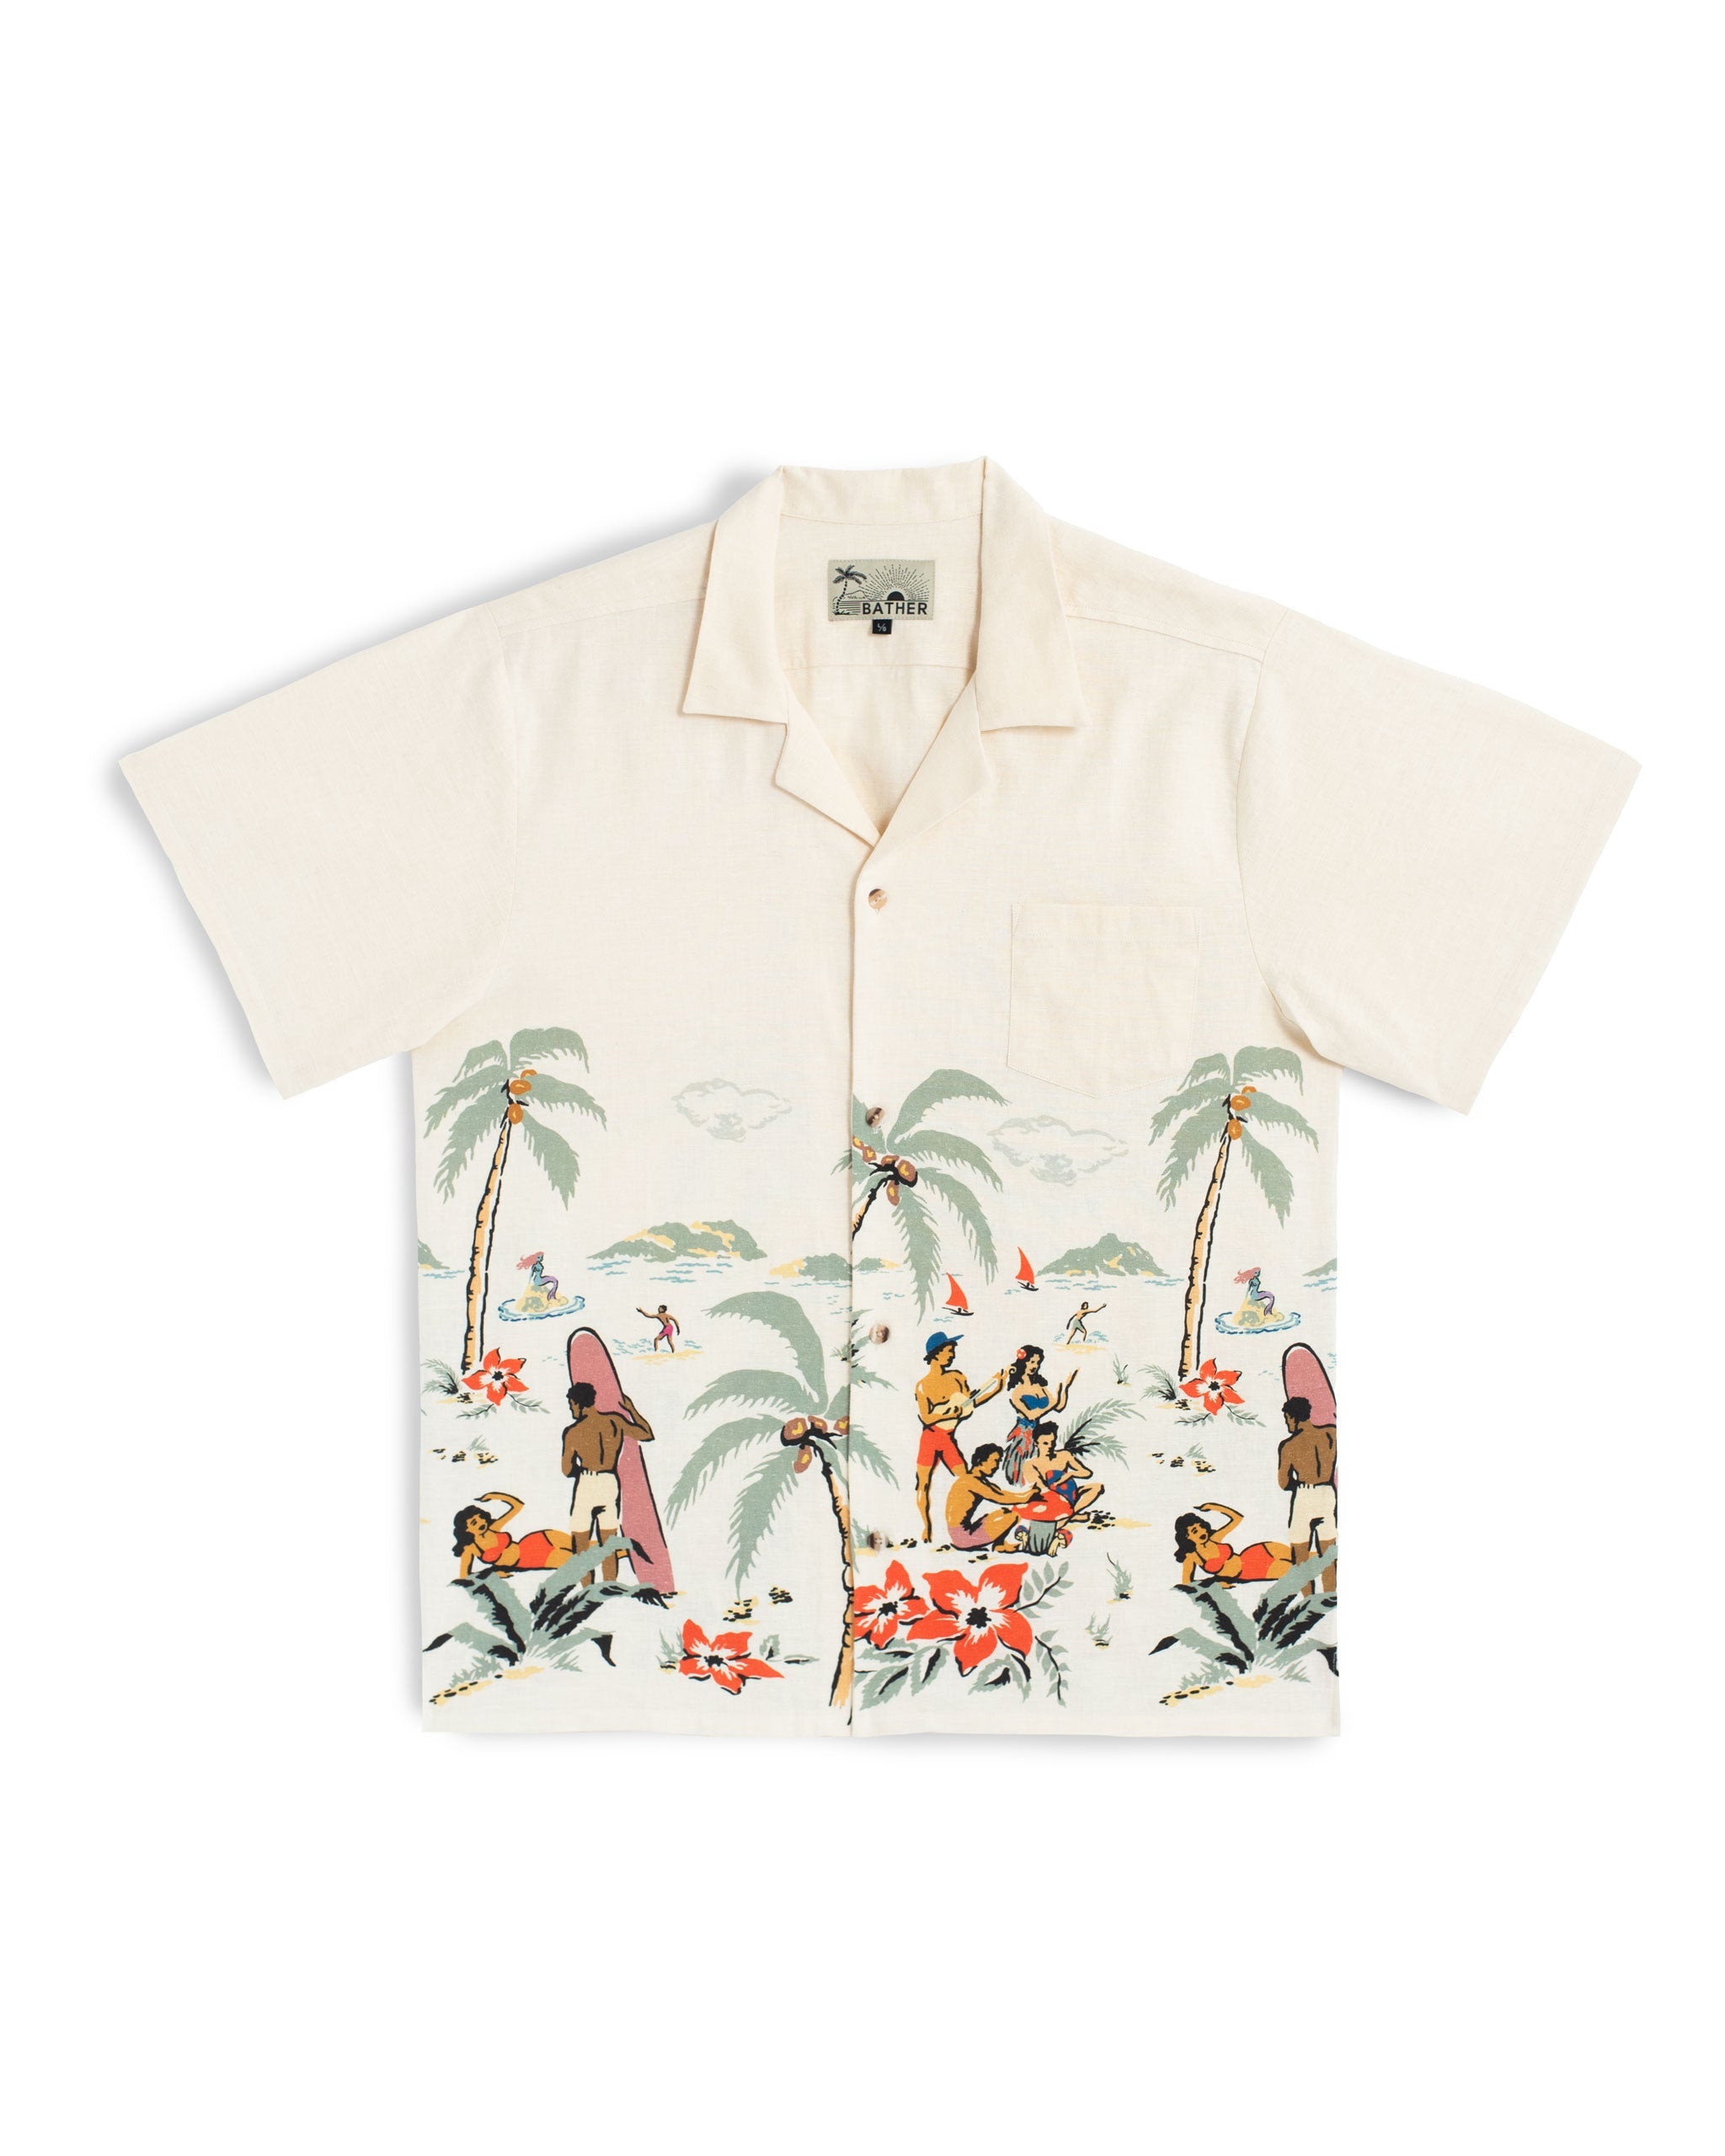 White linen camp shirt with a Hawaiian-inspired beach scene print